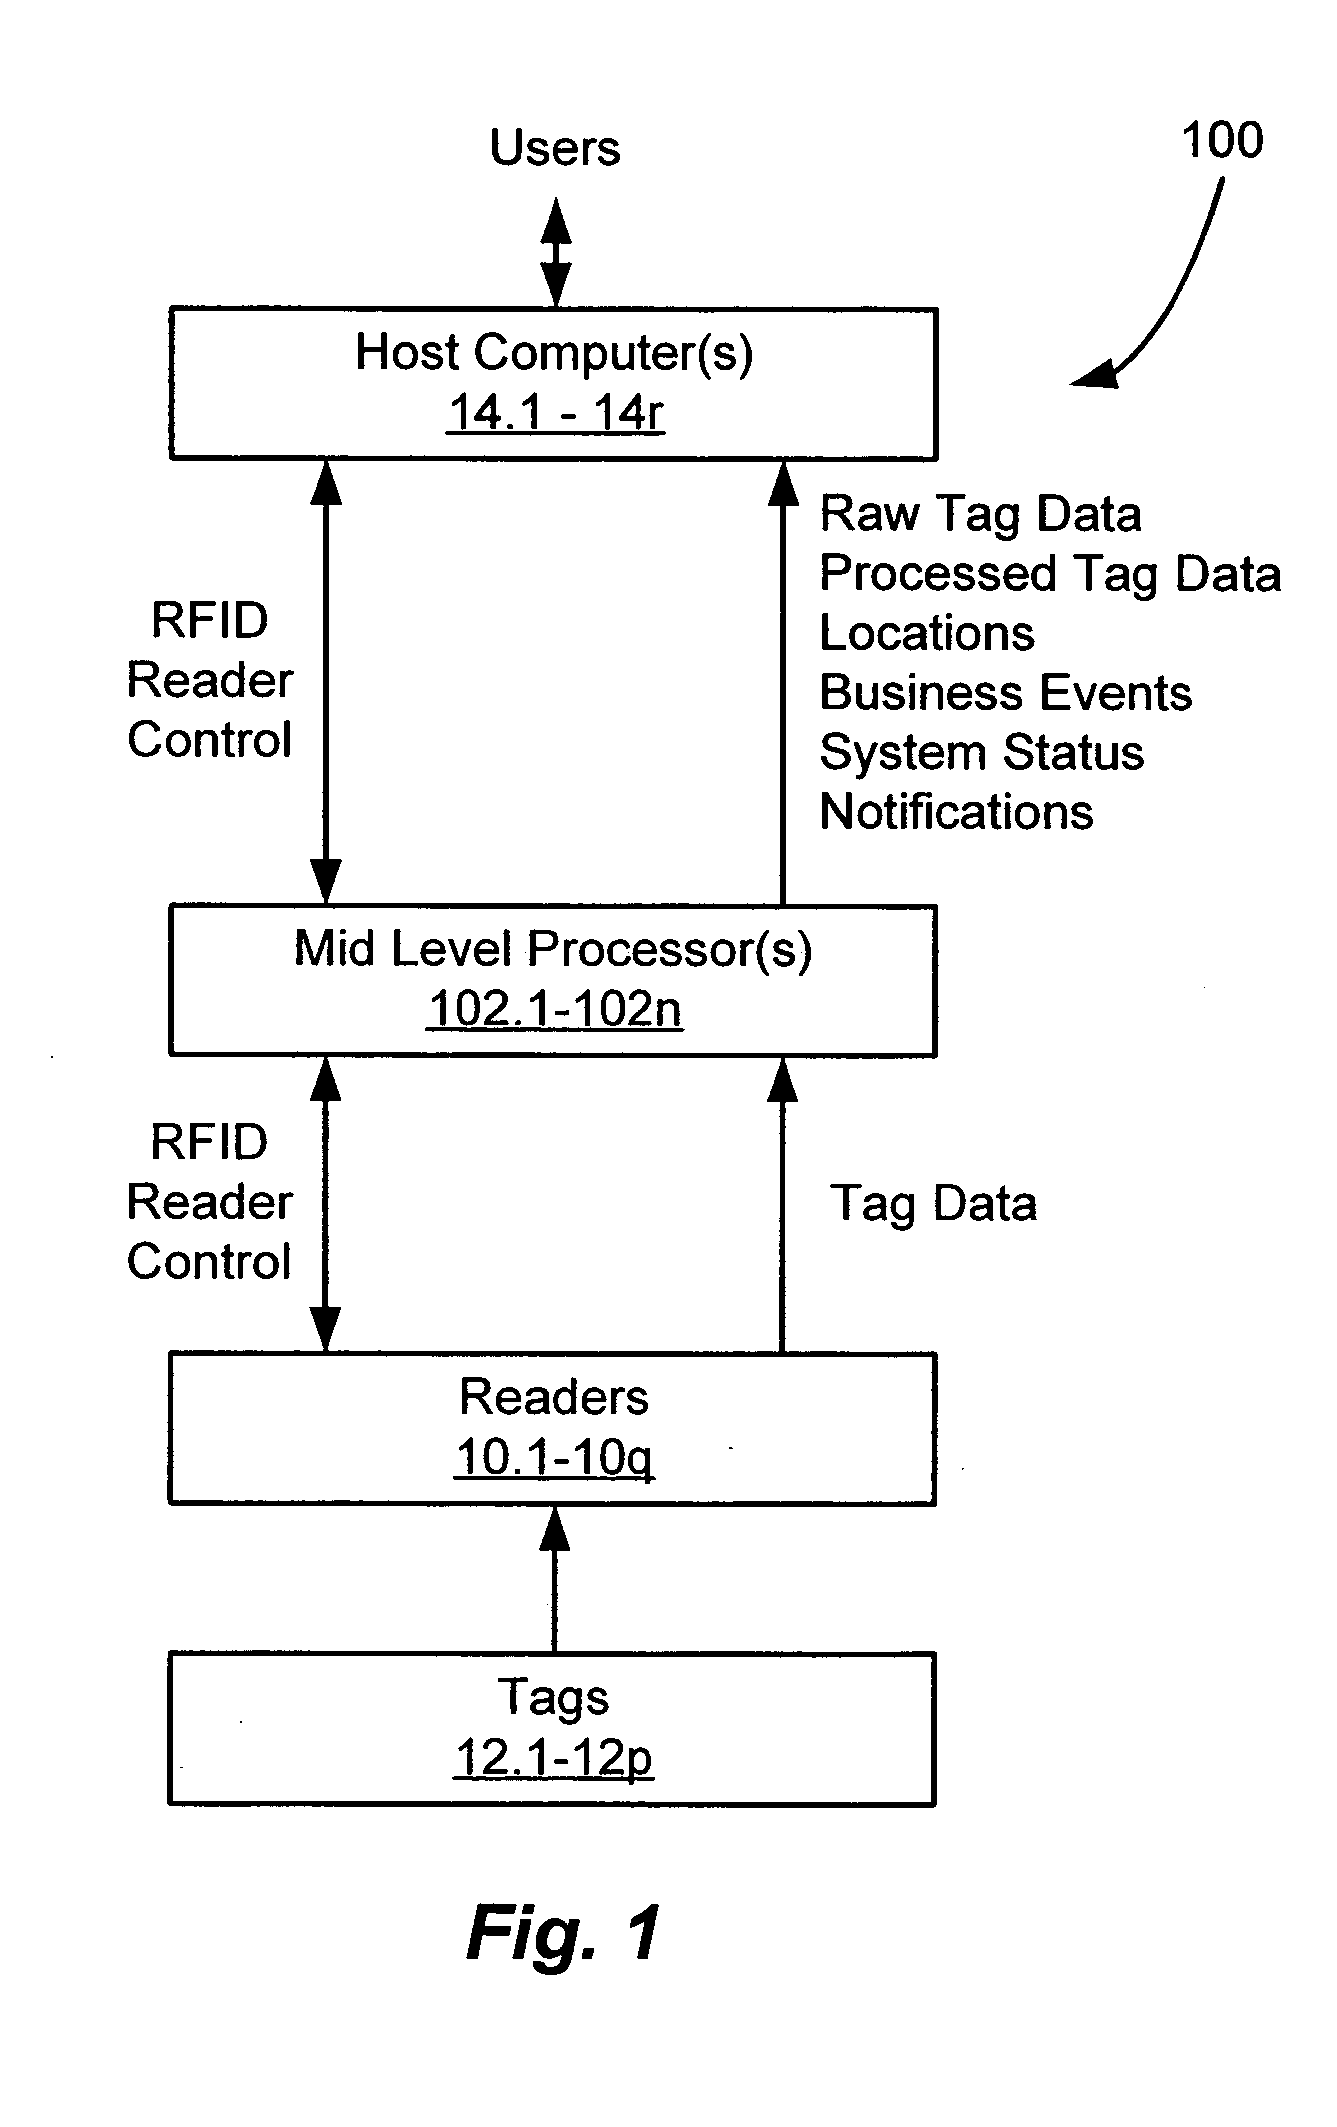 Location virtualization in an RFID system